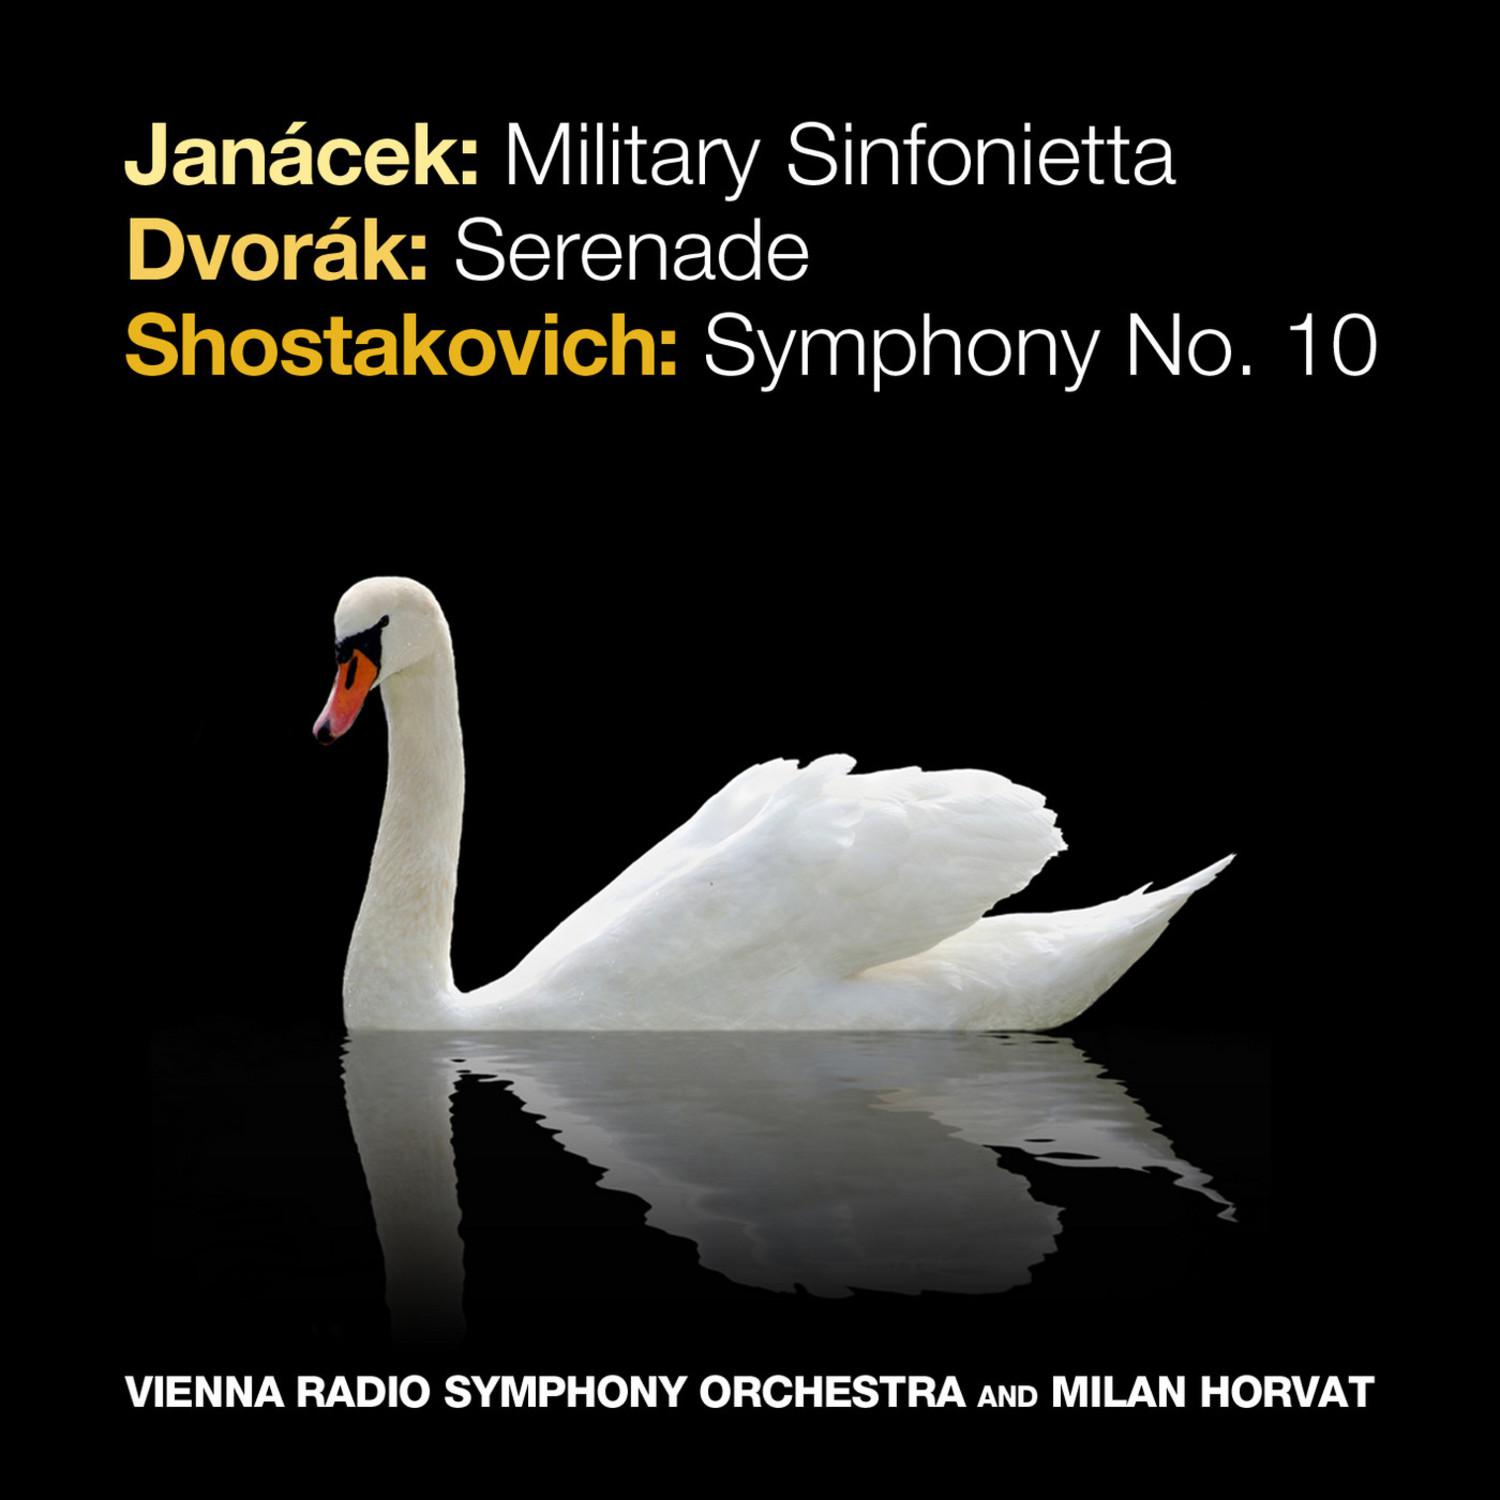 Jana cek: Military Sinfonietta  Dvora k: Serenade  Shostakovich: Symphony No. 10